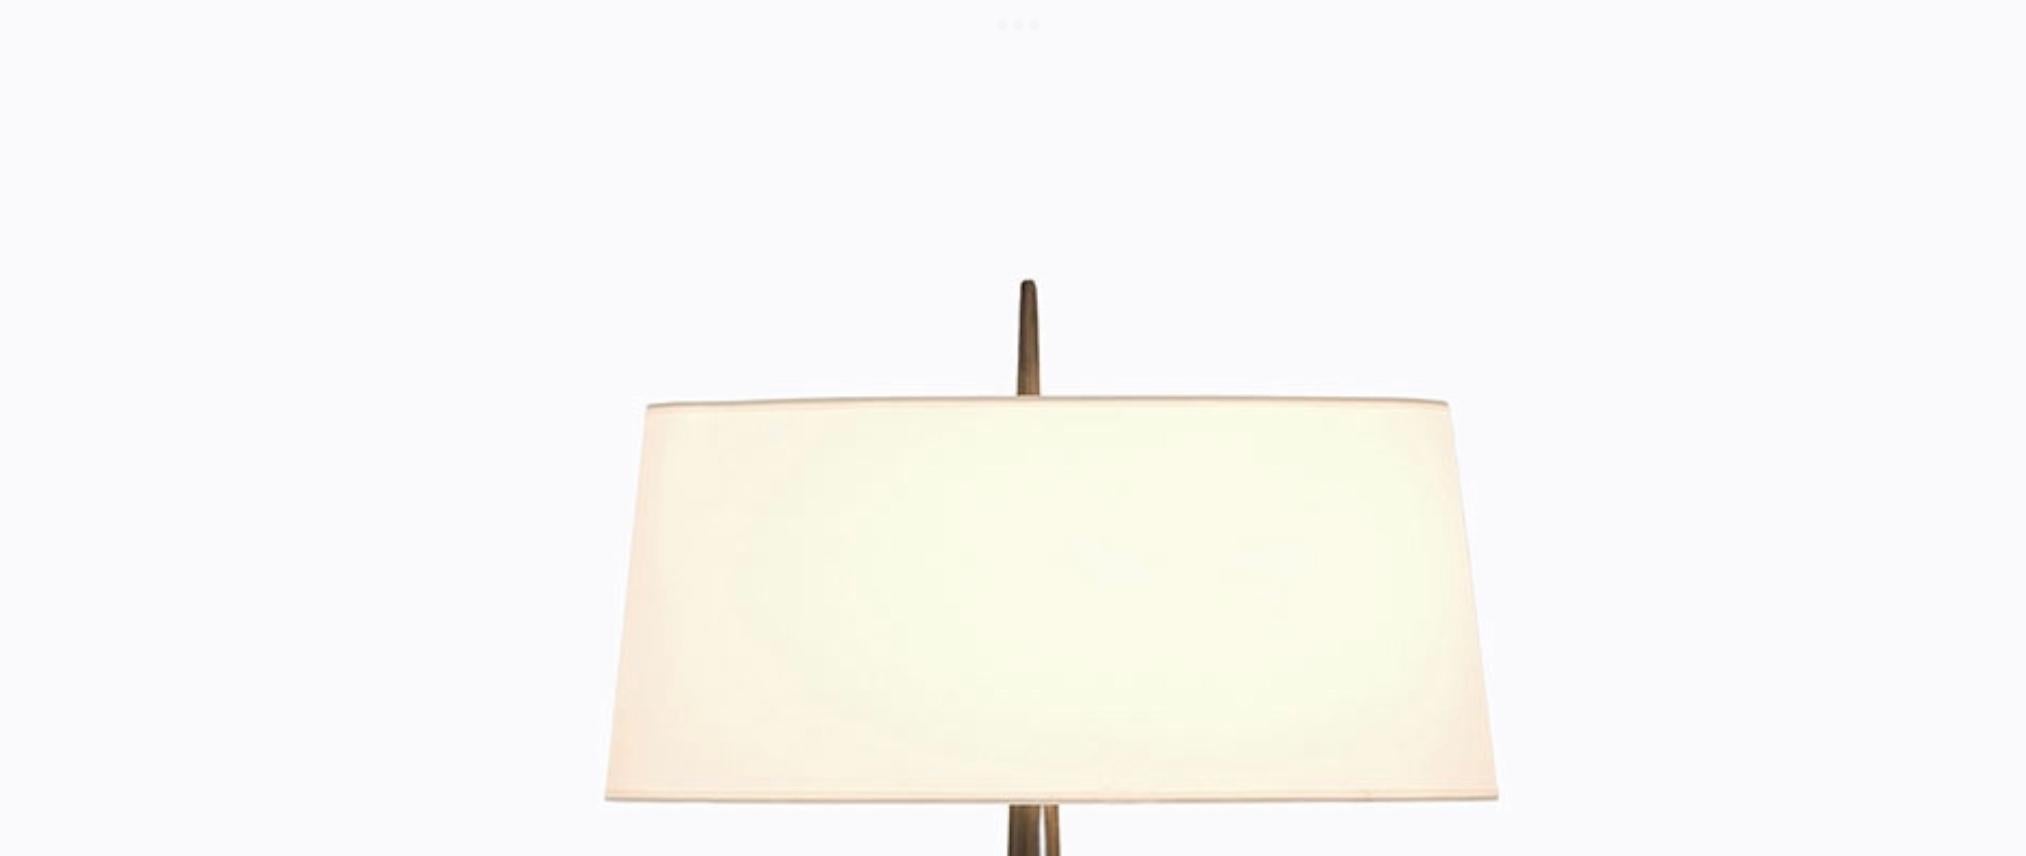 Herve Van Der Straeten Lampe Epines 178
Size: 7 x 9 x 33.